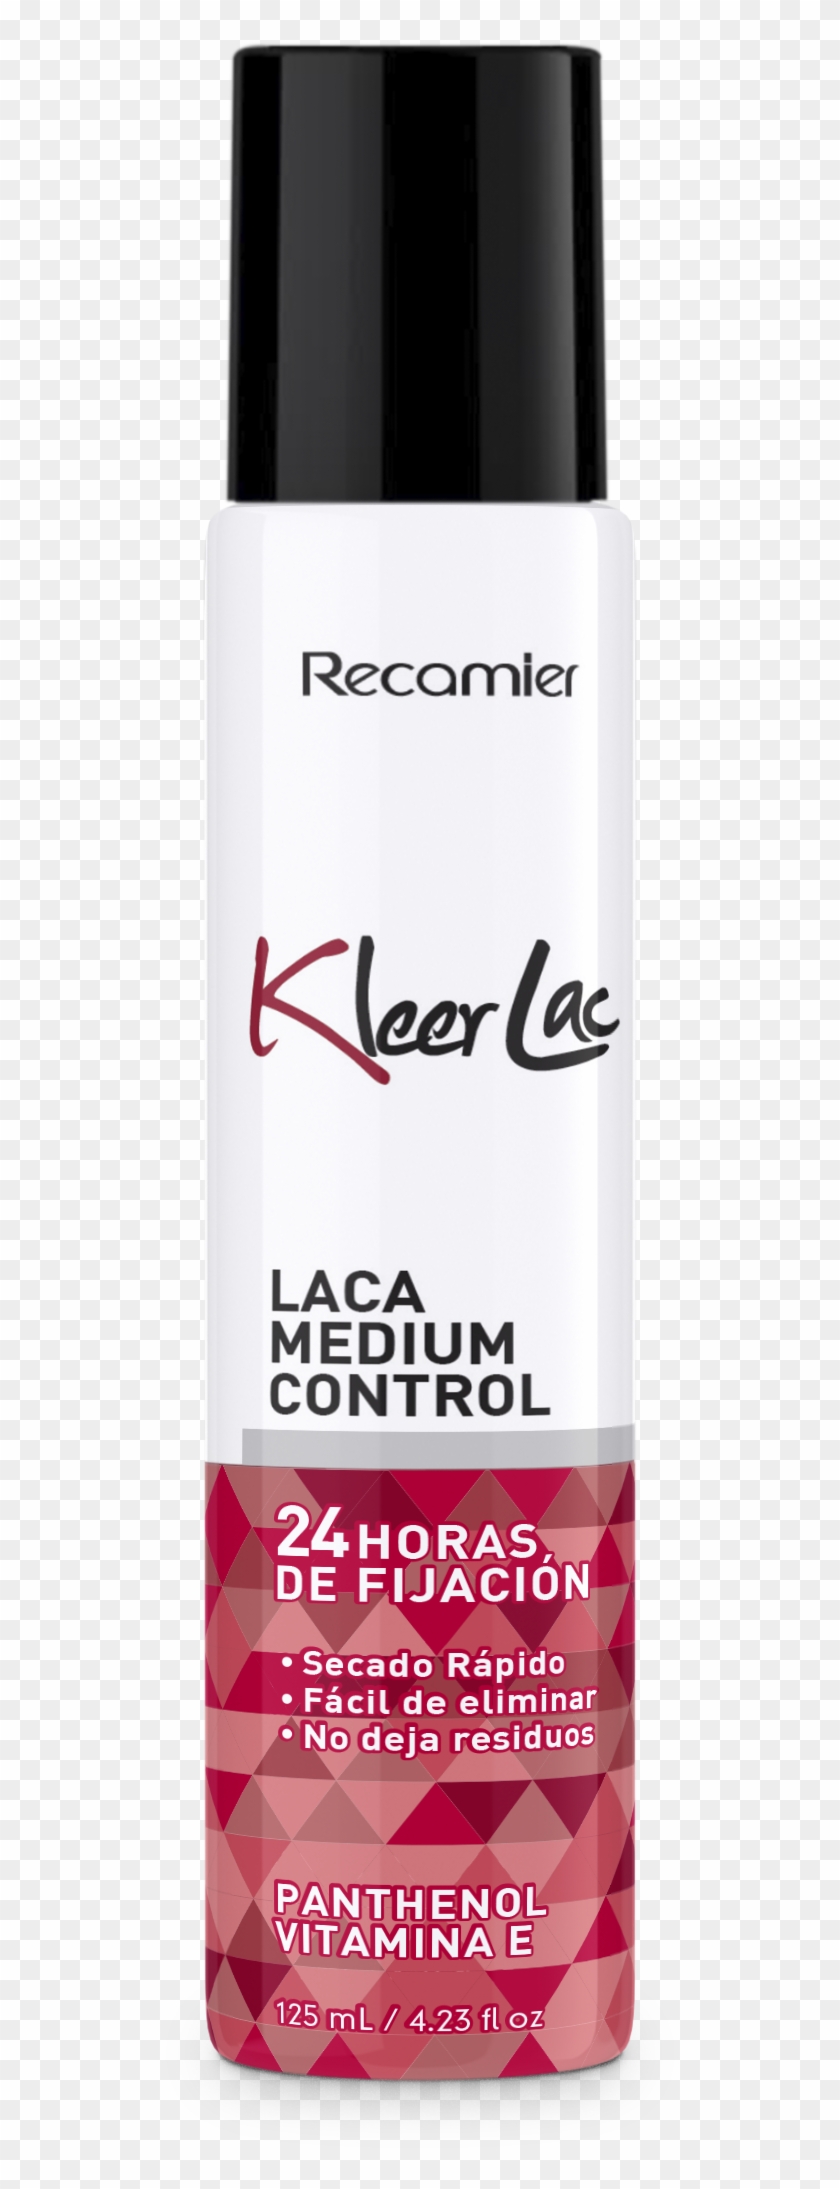 Kleer Lac Medium Control - Bottle Clipart #5487617